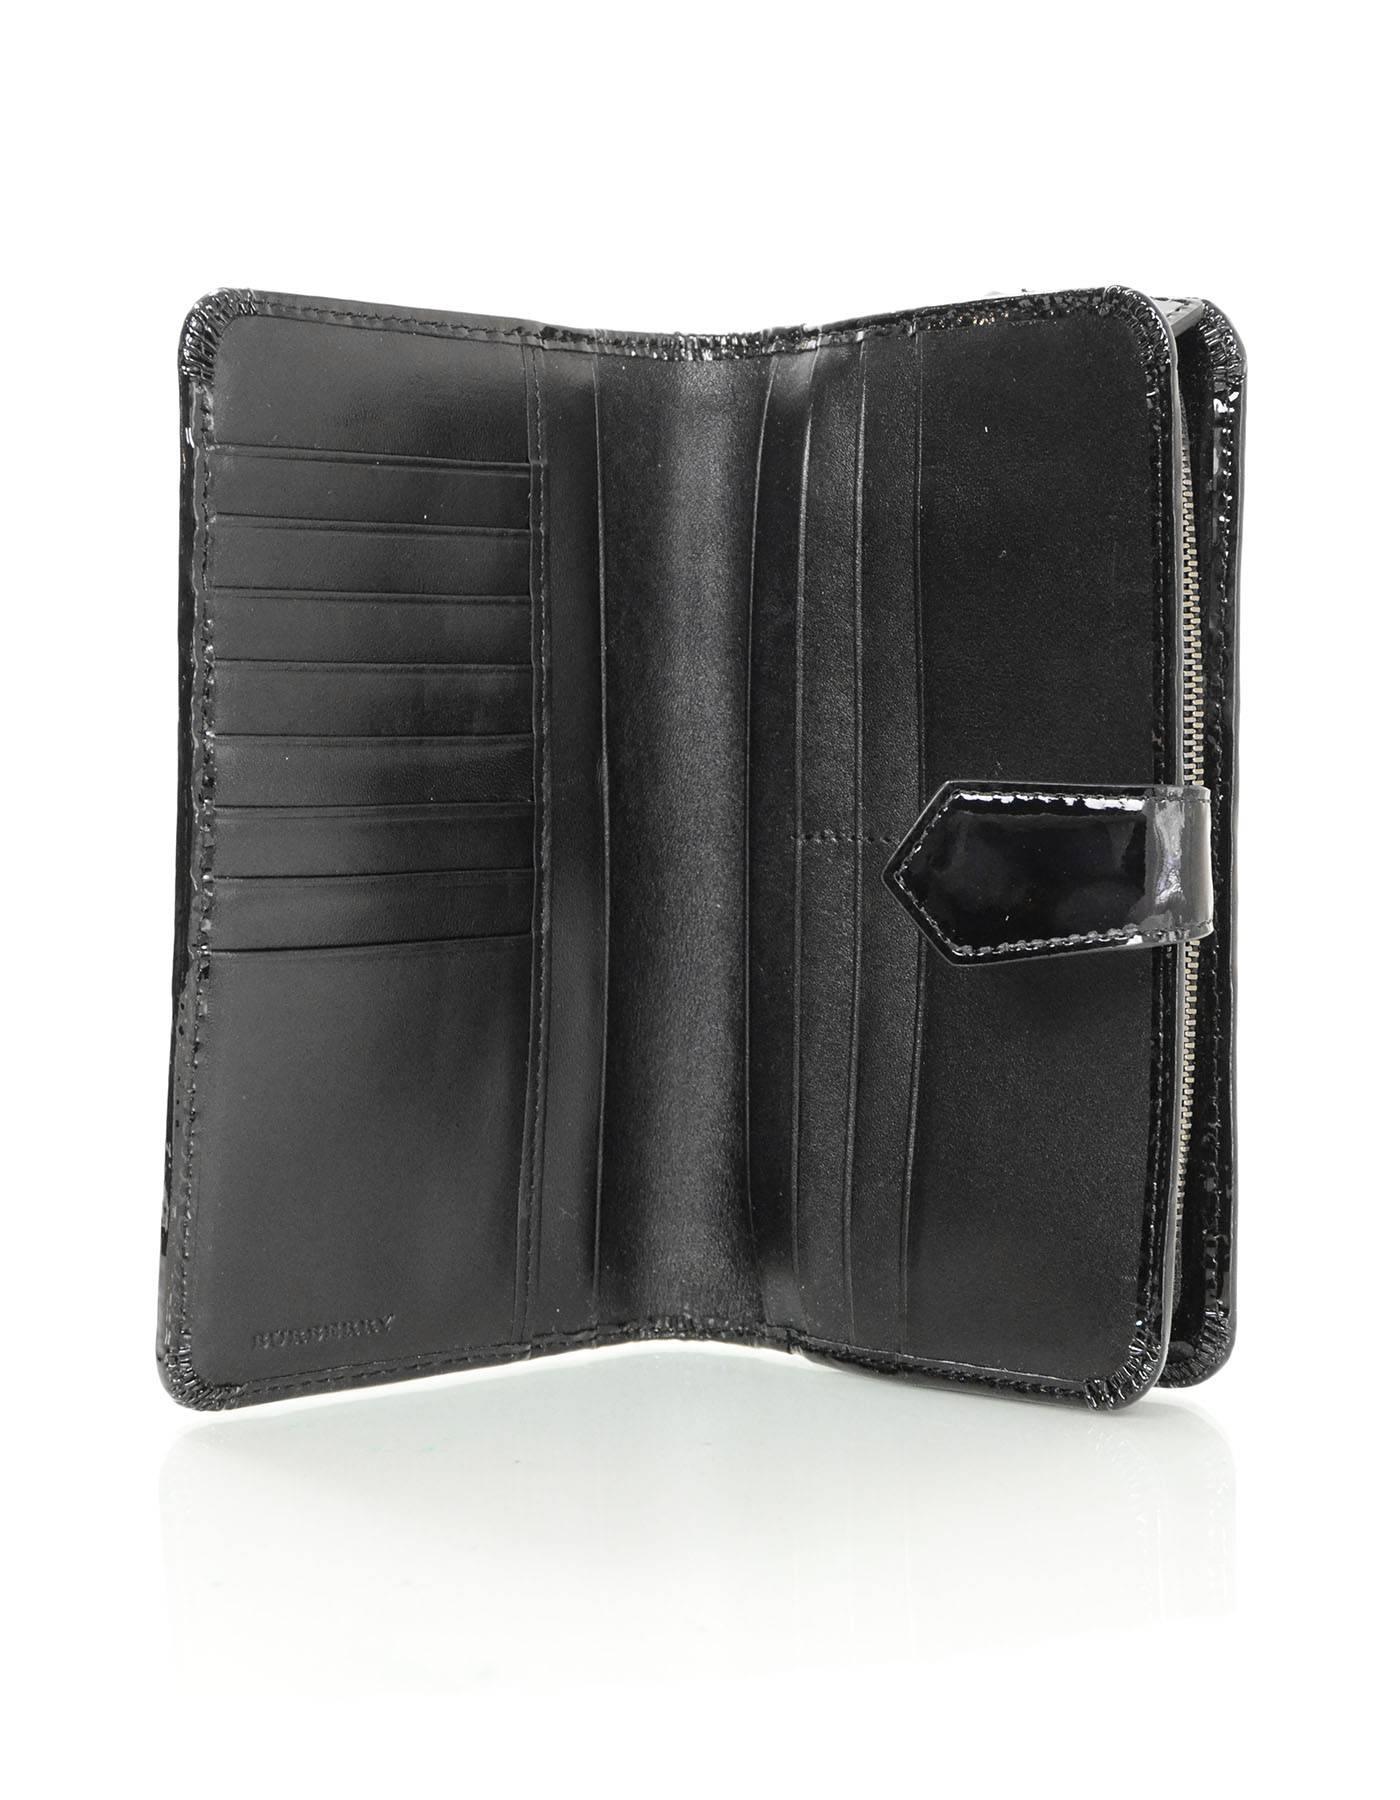 Burberry Black Patent Leather and Nova Plaid Wallet 2